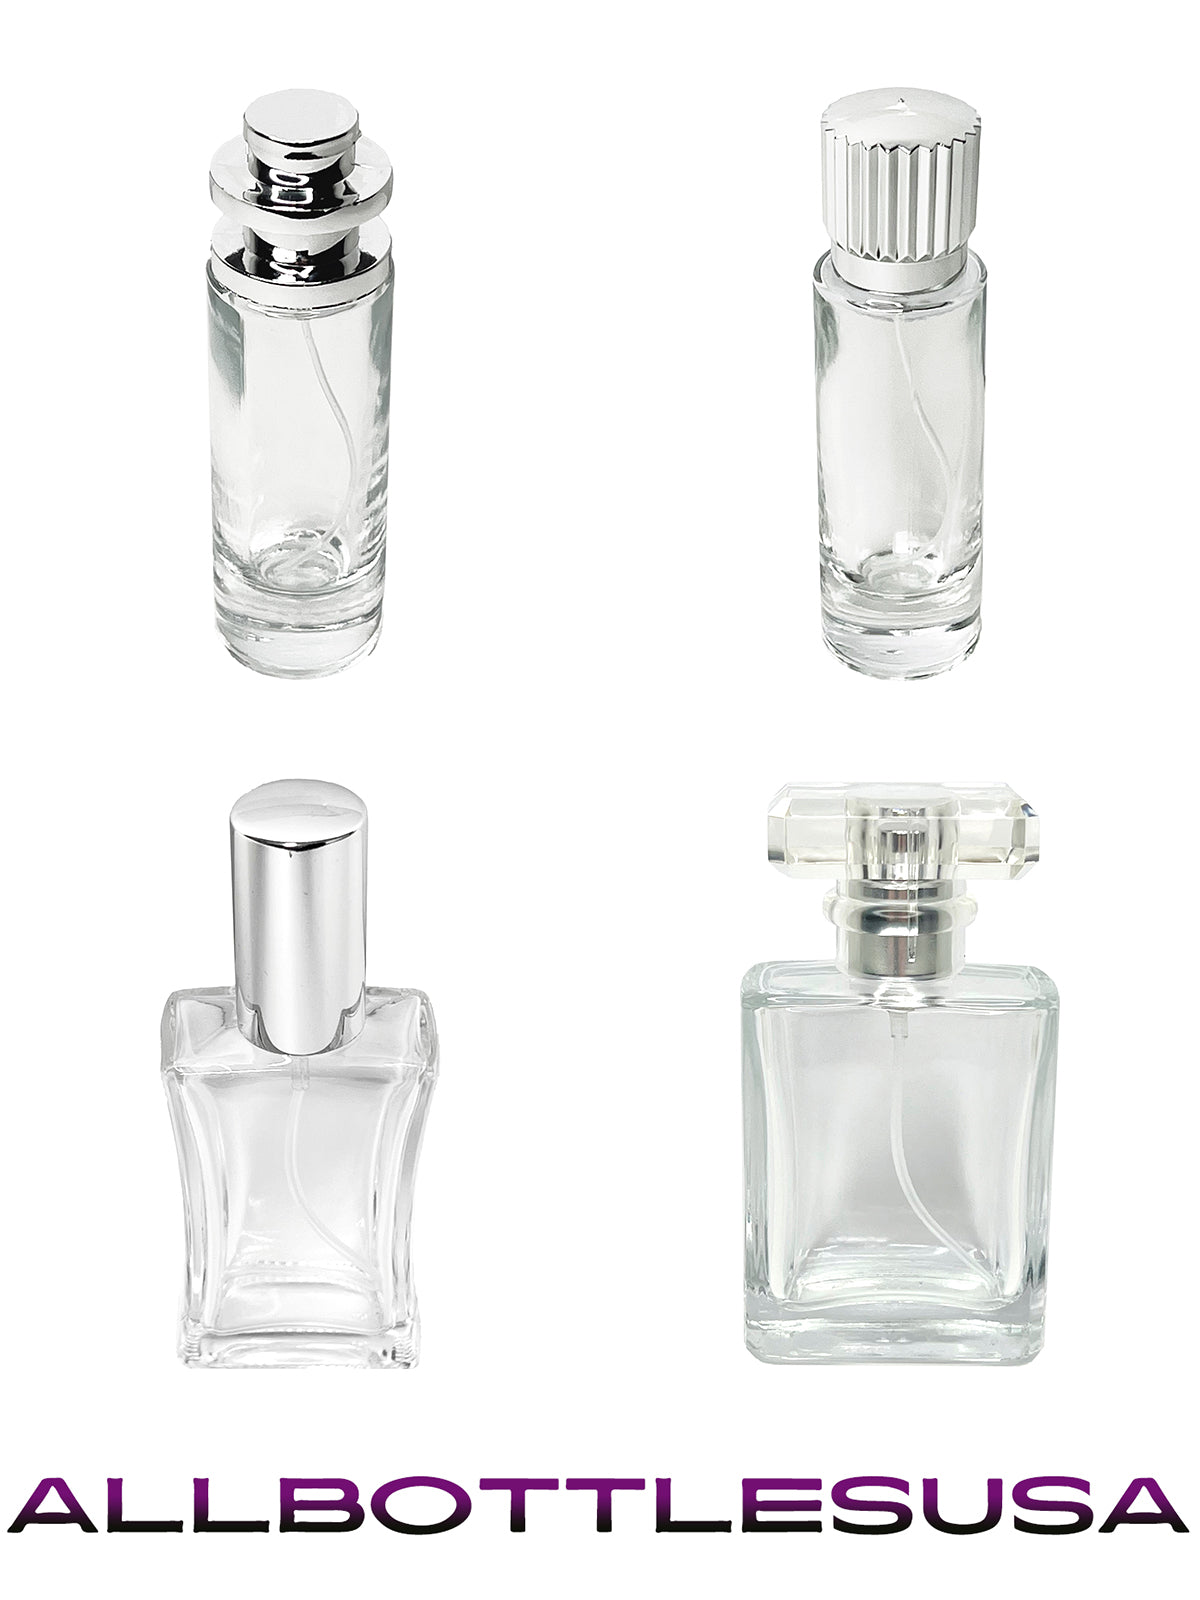 Wholesale Perfume Bottles / USA Based / Allbottlesusa